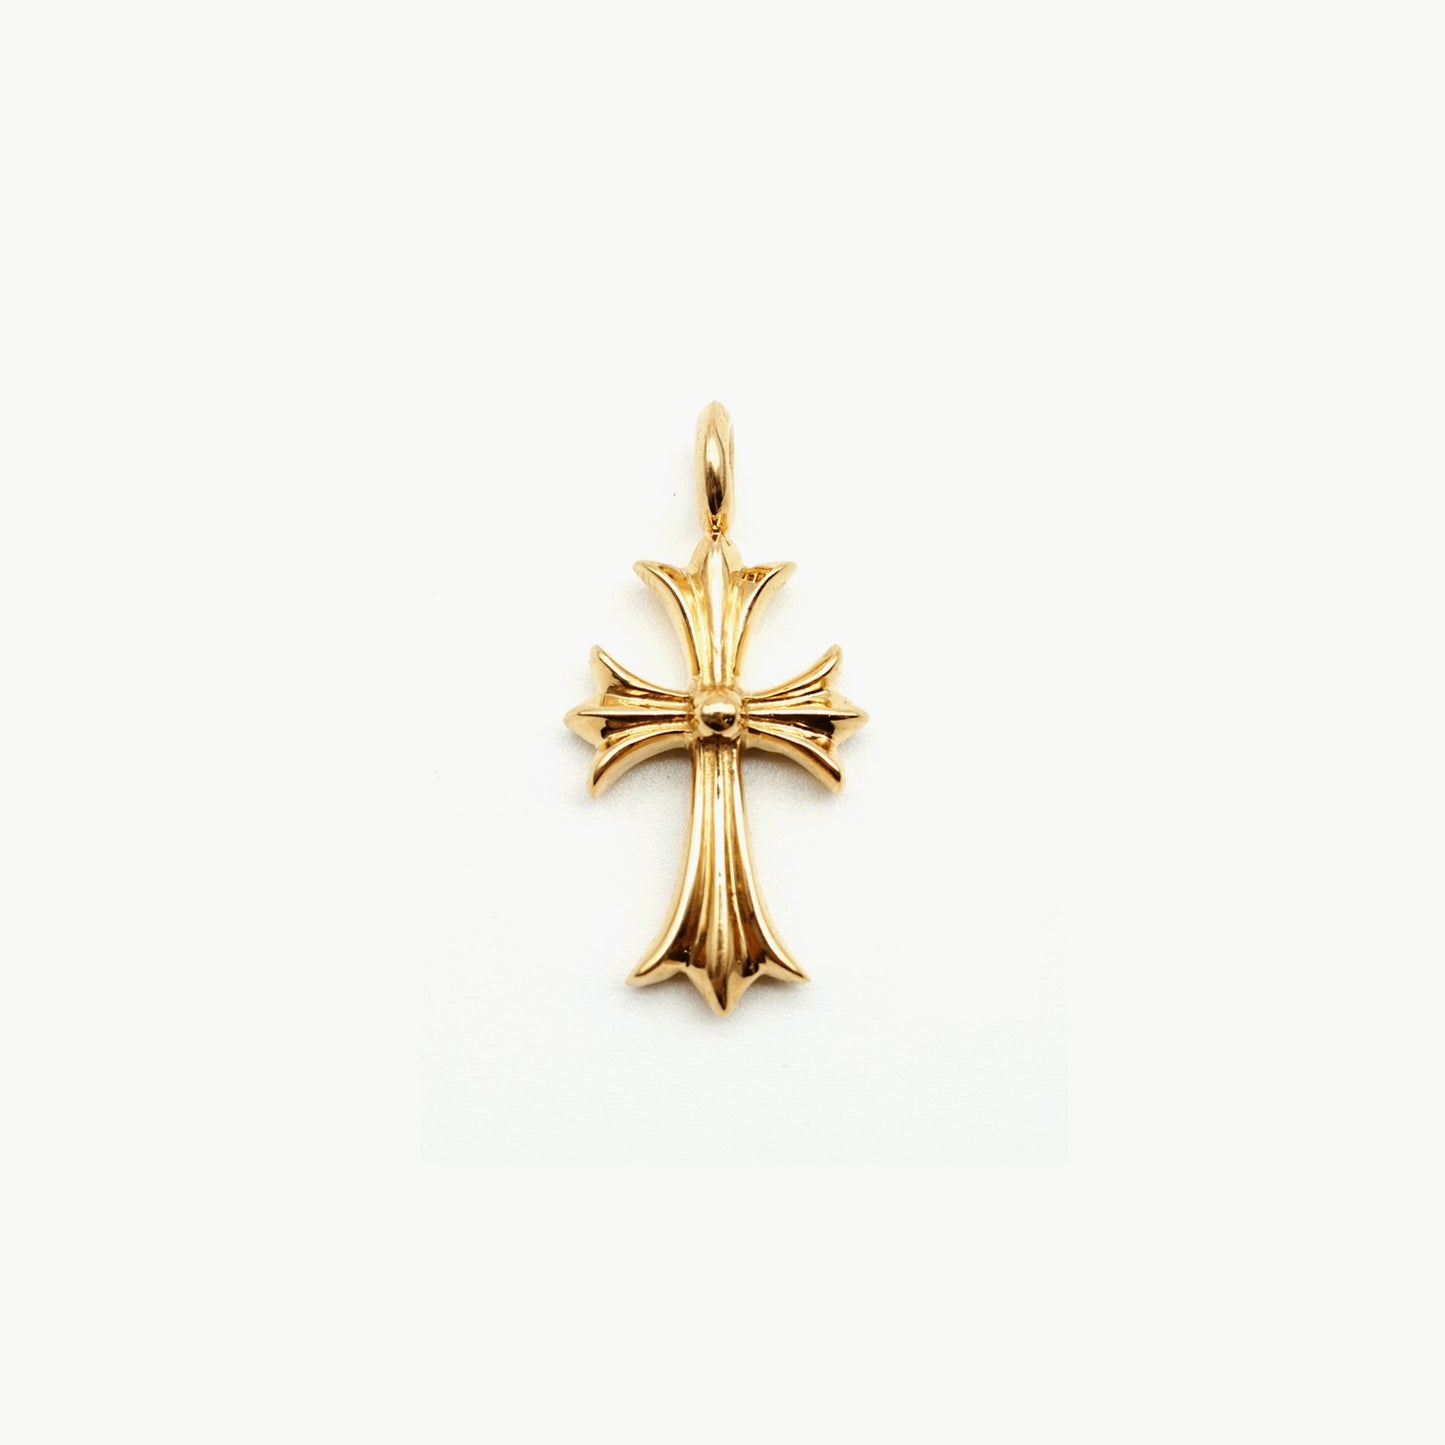 Chrome Hearts 22K Gold Emerald Cross Necklace Charm - SHENGLI ROAD MARKET